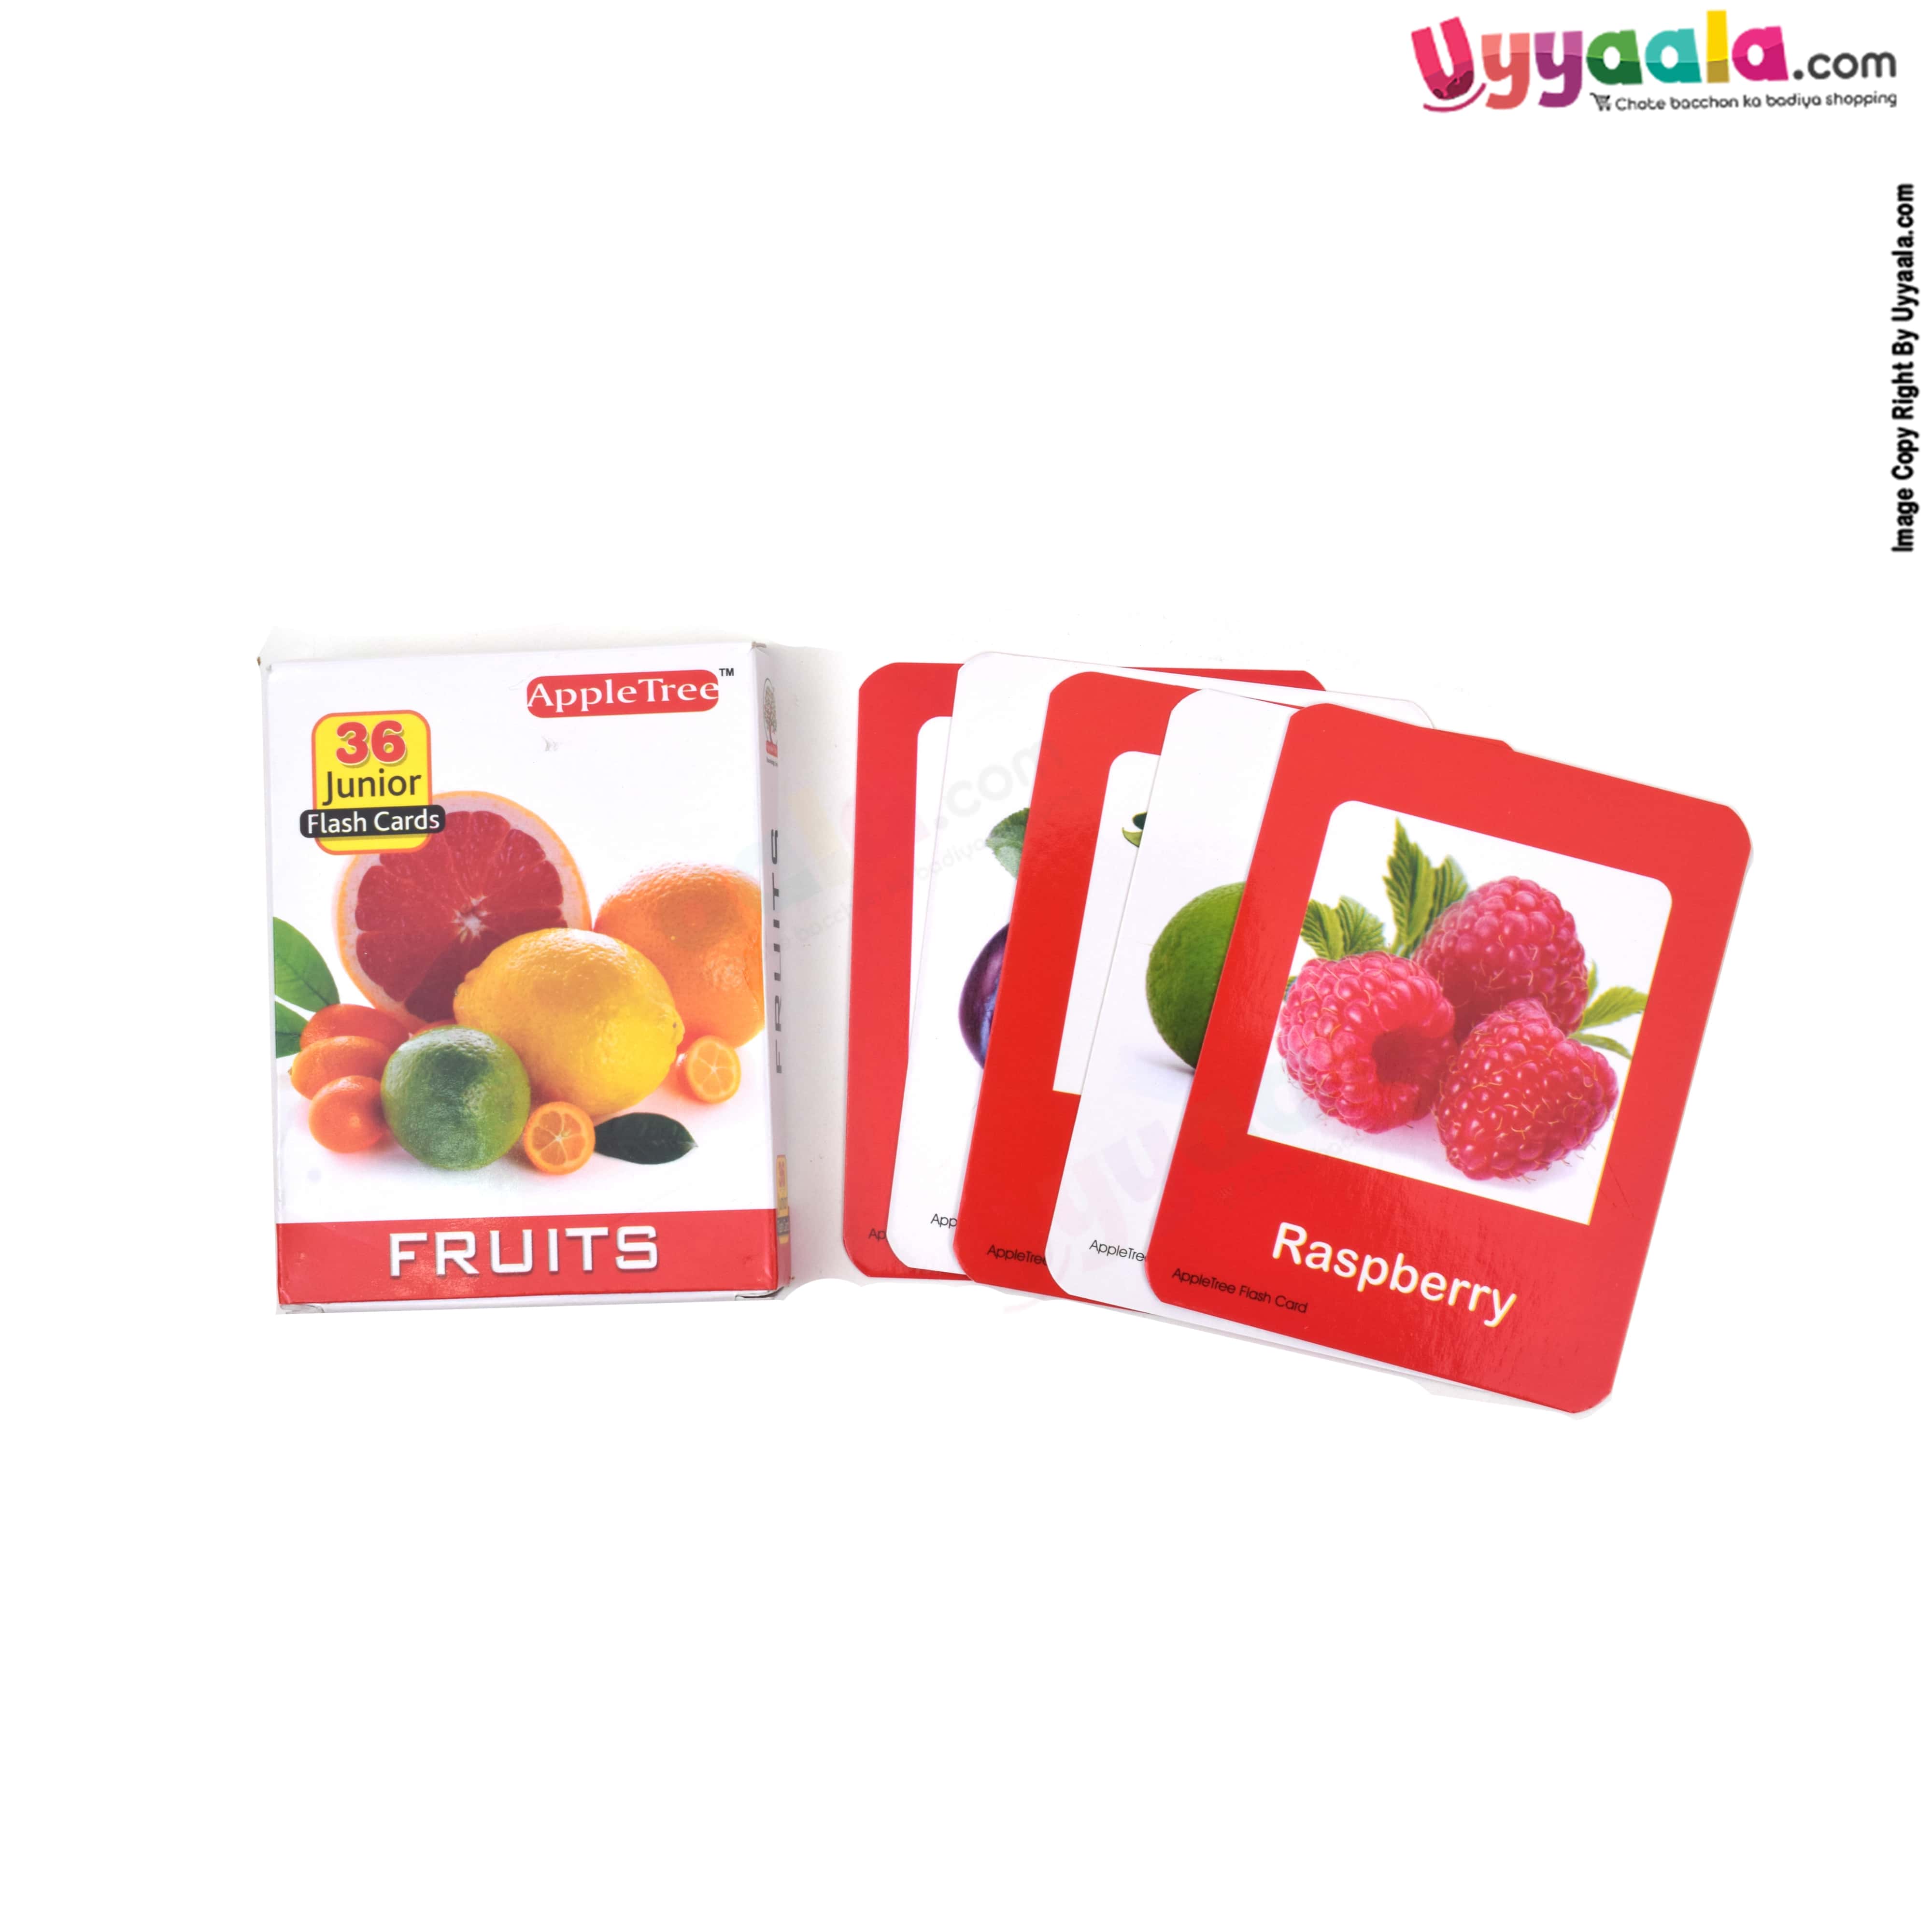 APPLE TREE junior flash cards - fruits